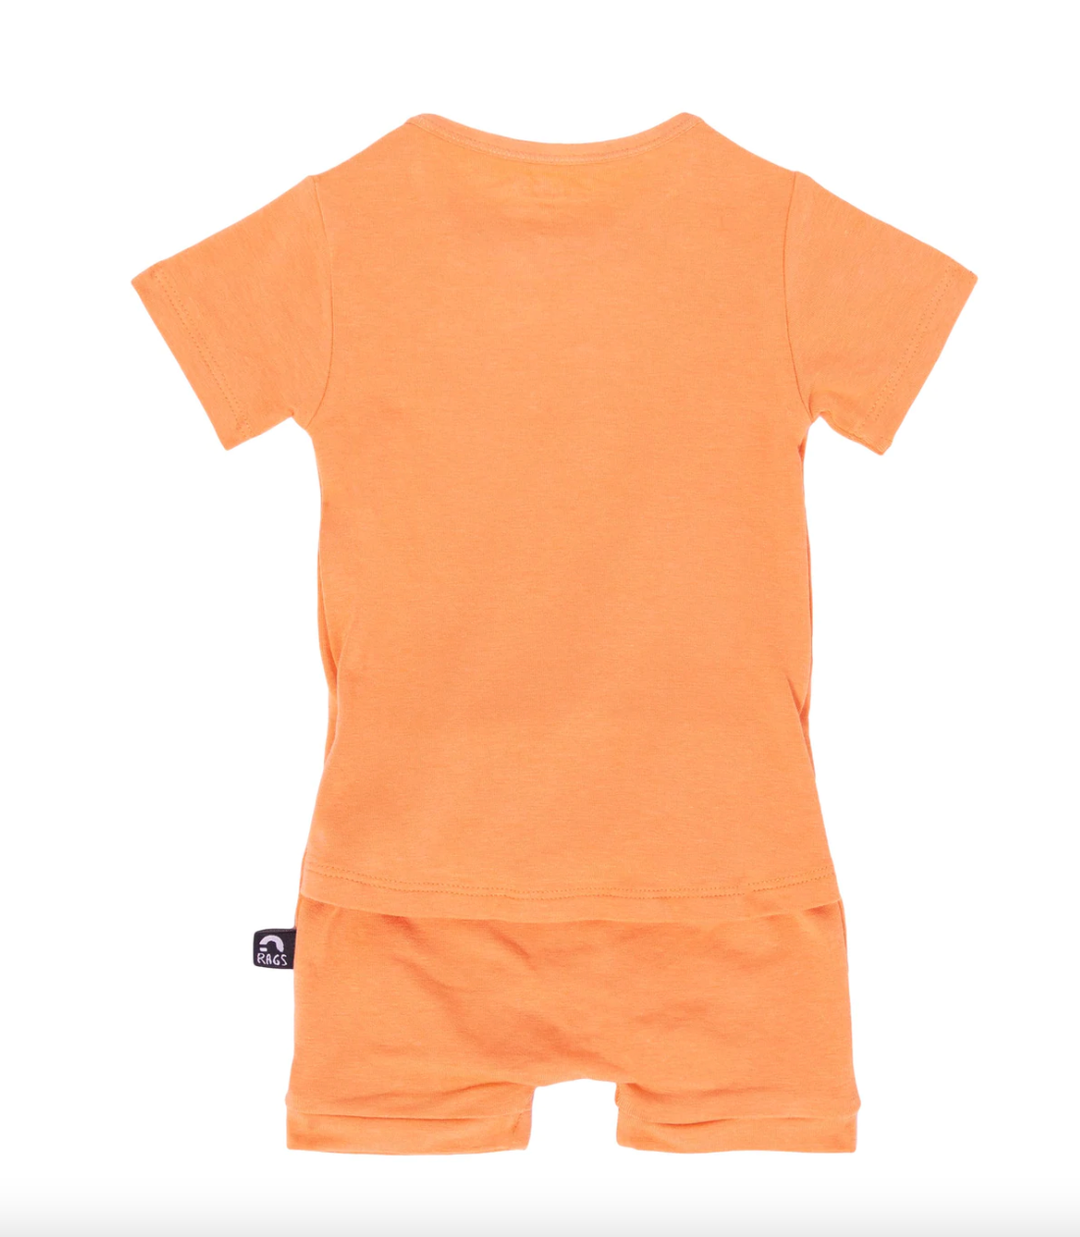 Rags - Essentials Infant Peekabooty Short Sleeve Shorts Romper in Copper Tan